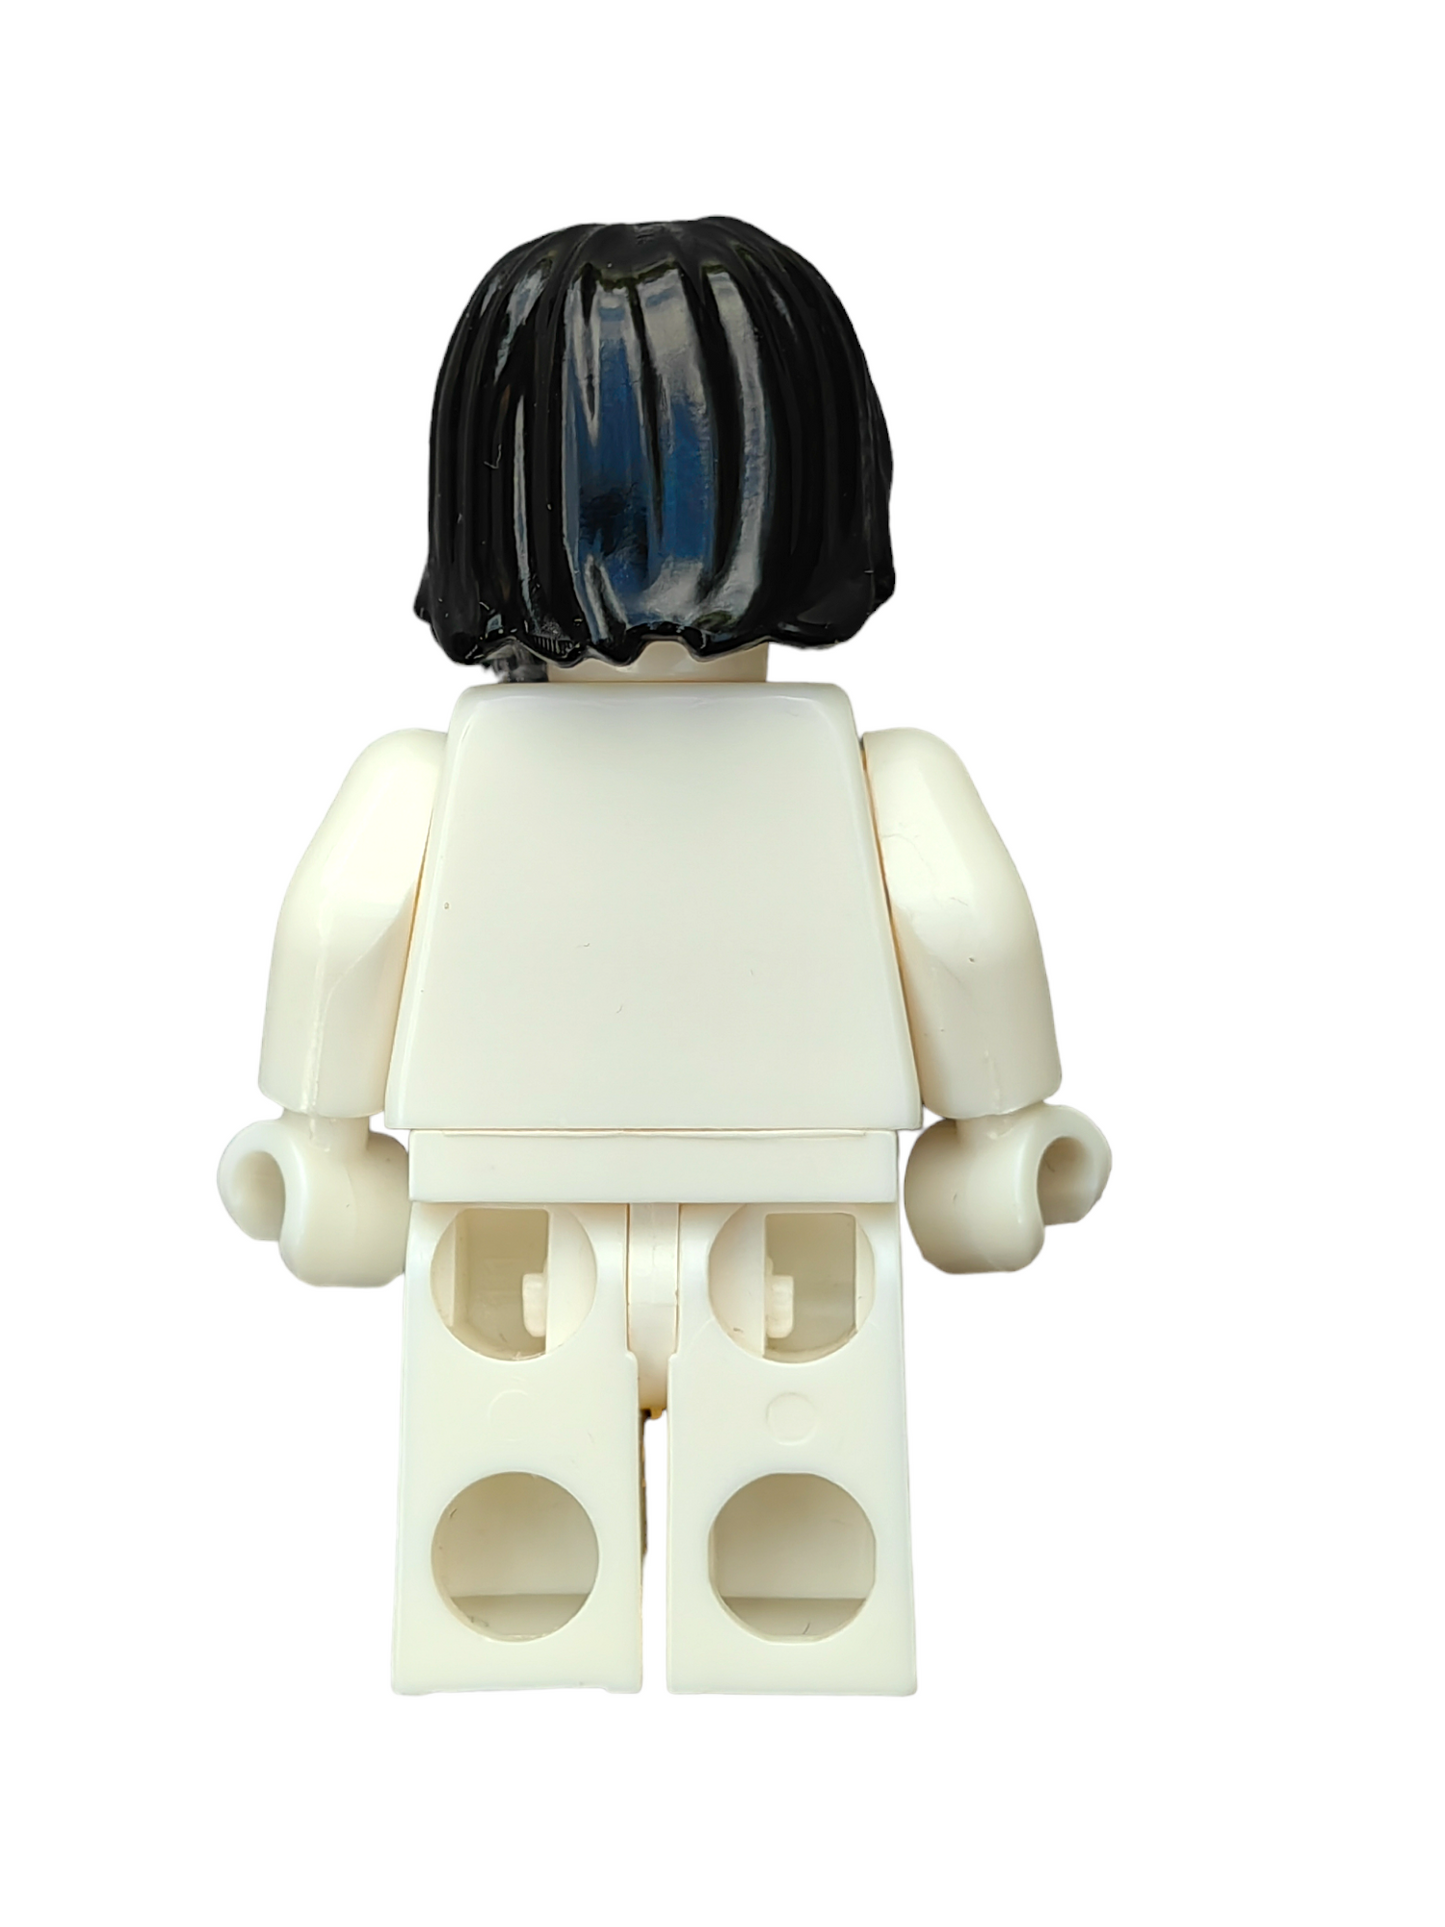 LEGO Wig, Black Hair Medium Length with Middle Parting - UB1312